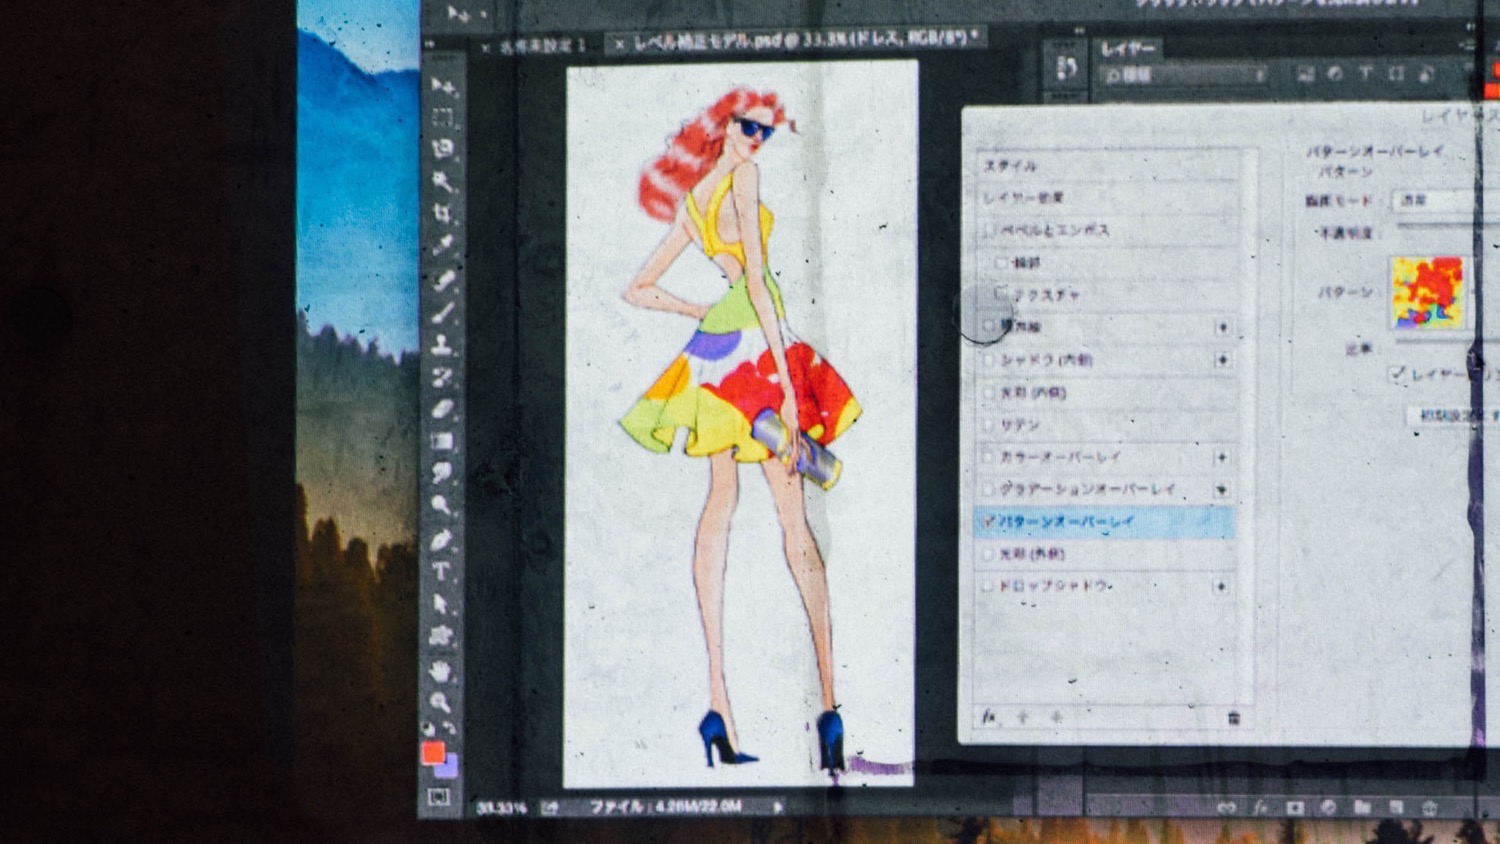 Tokyo fashion technology lab report 1 63